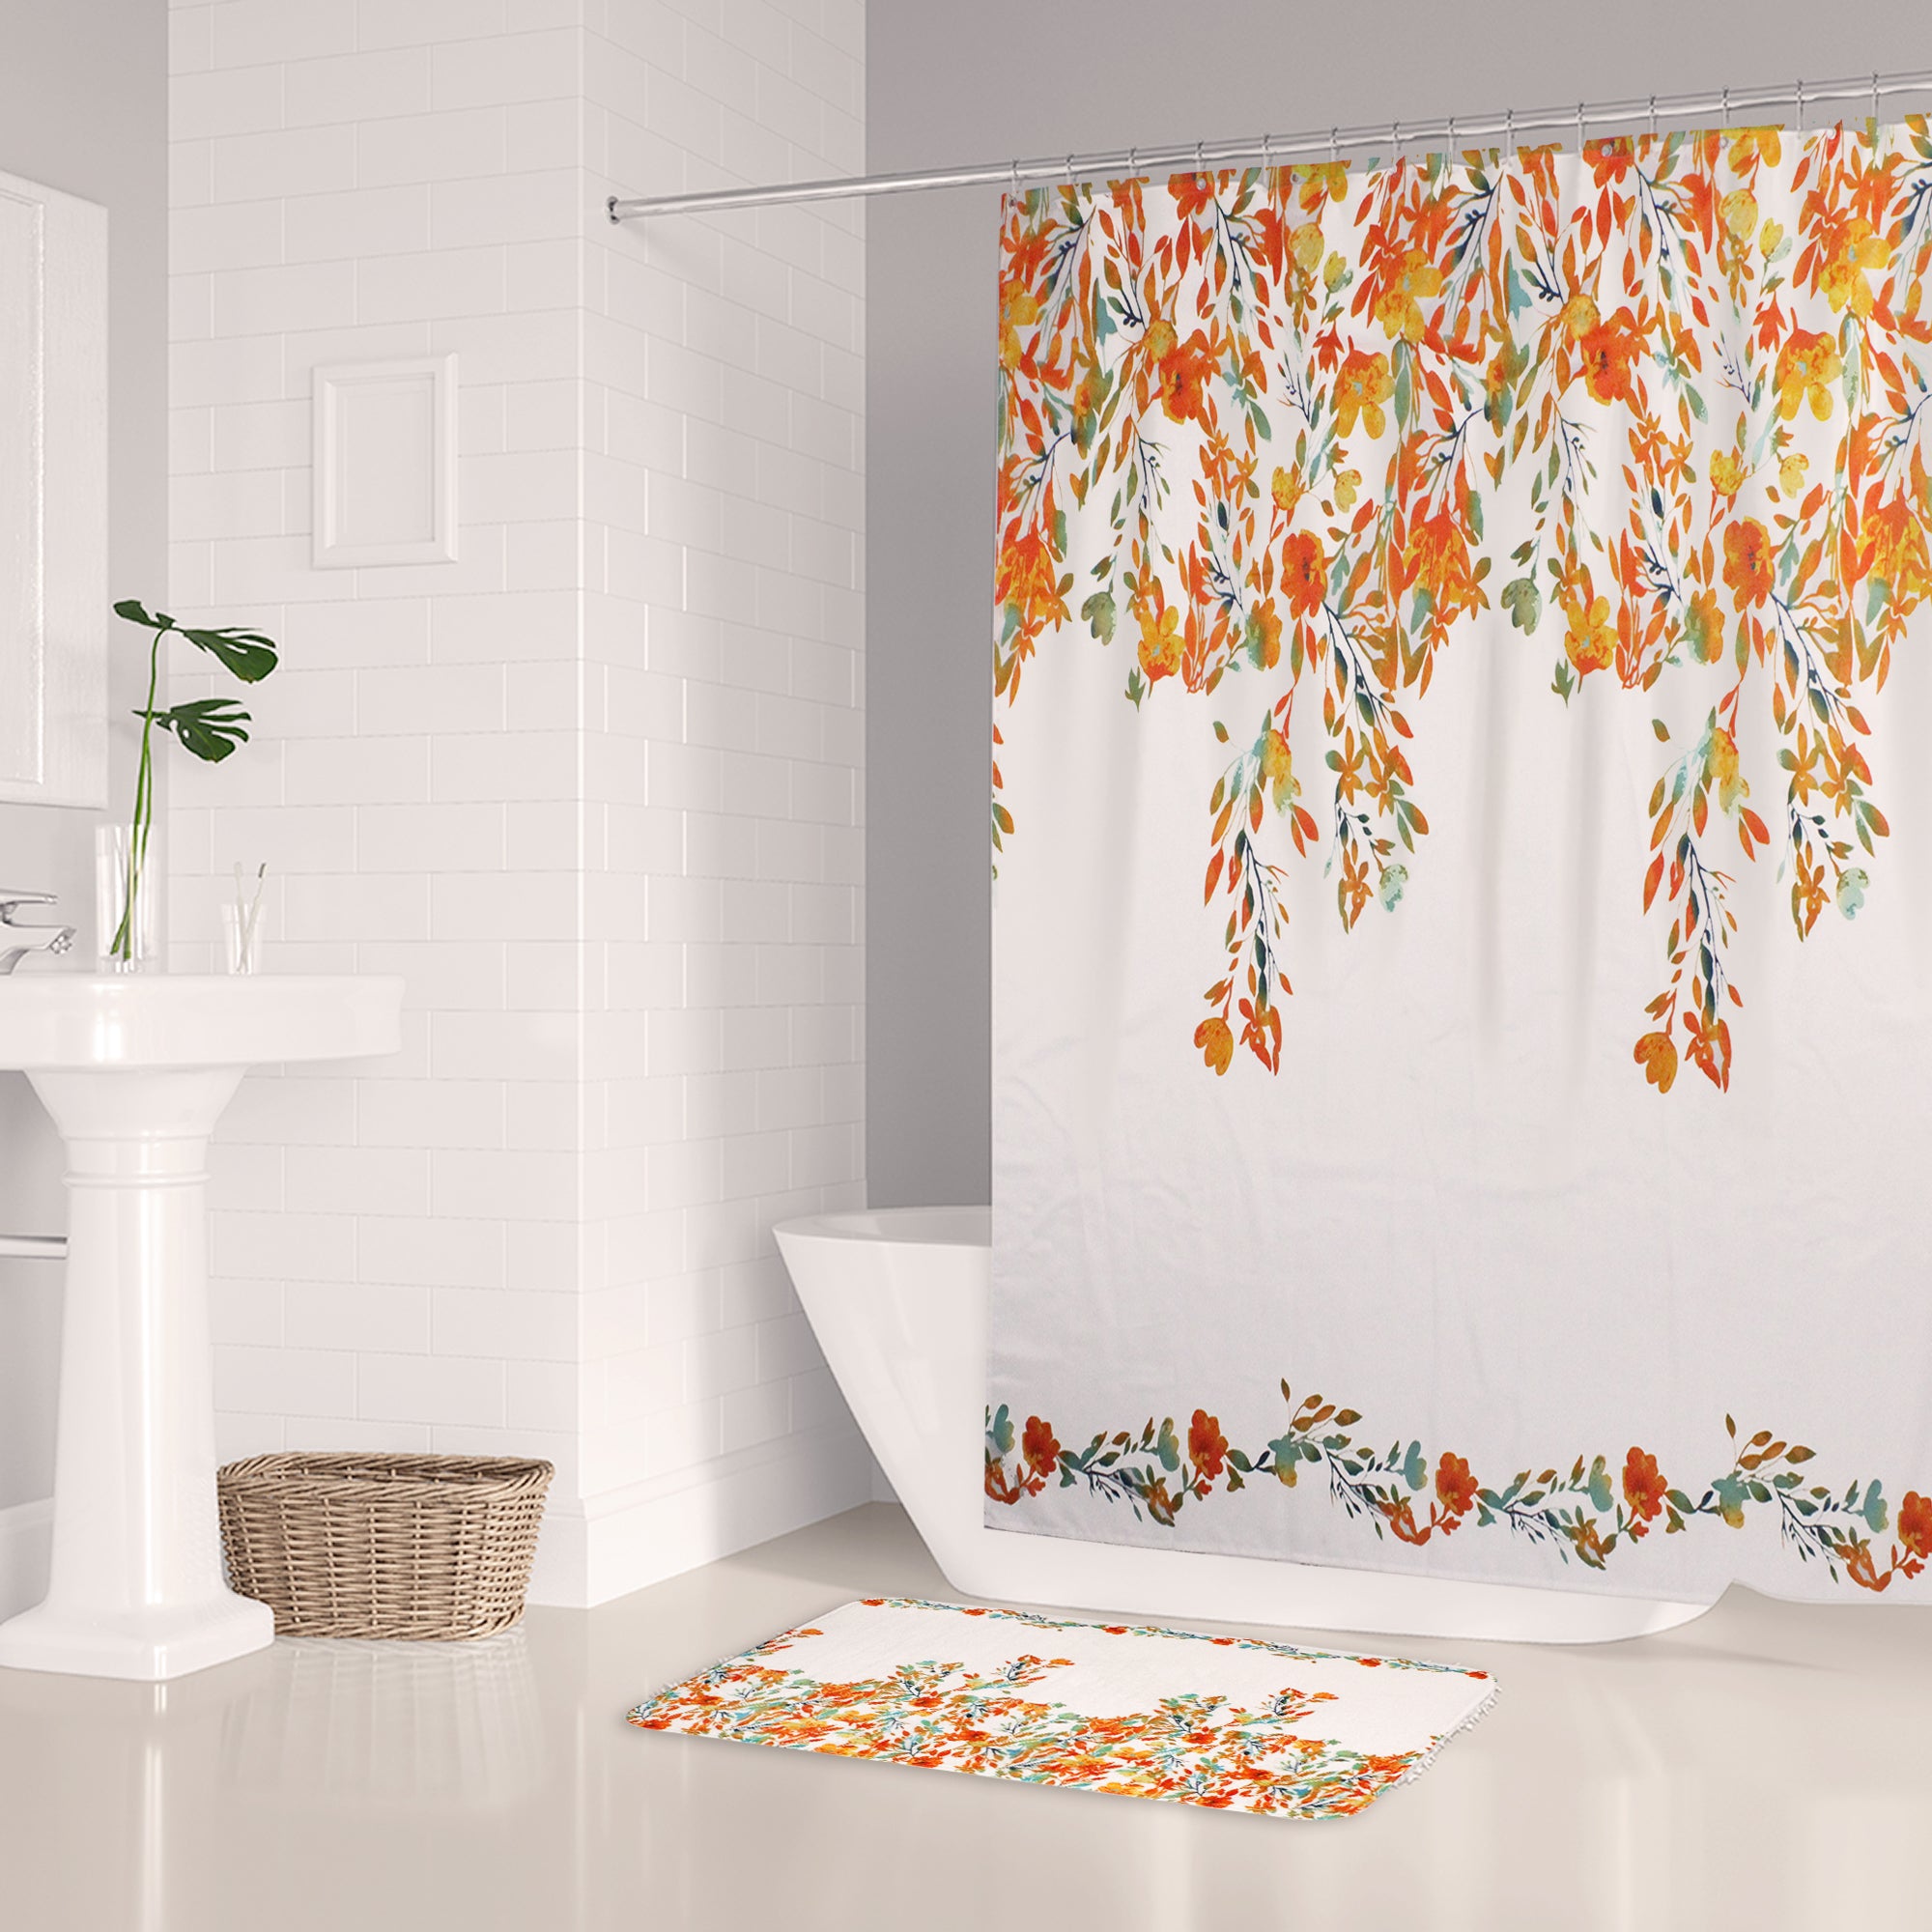 LMA 180cm Floral Fantasy Fabric Shower Curtain & 3 Piece Toilet Cover & Mat Set